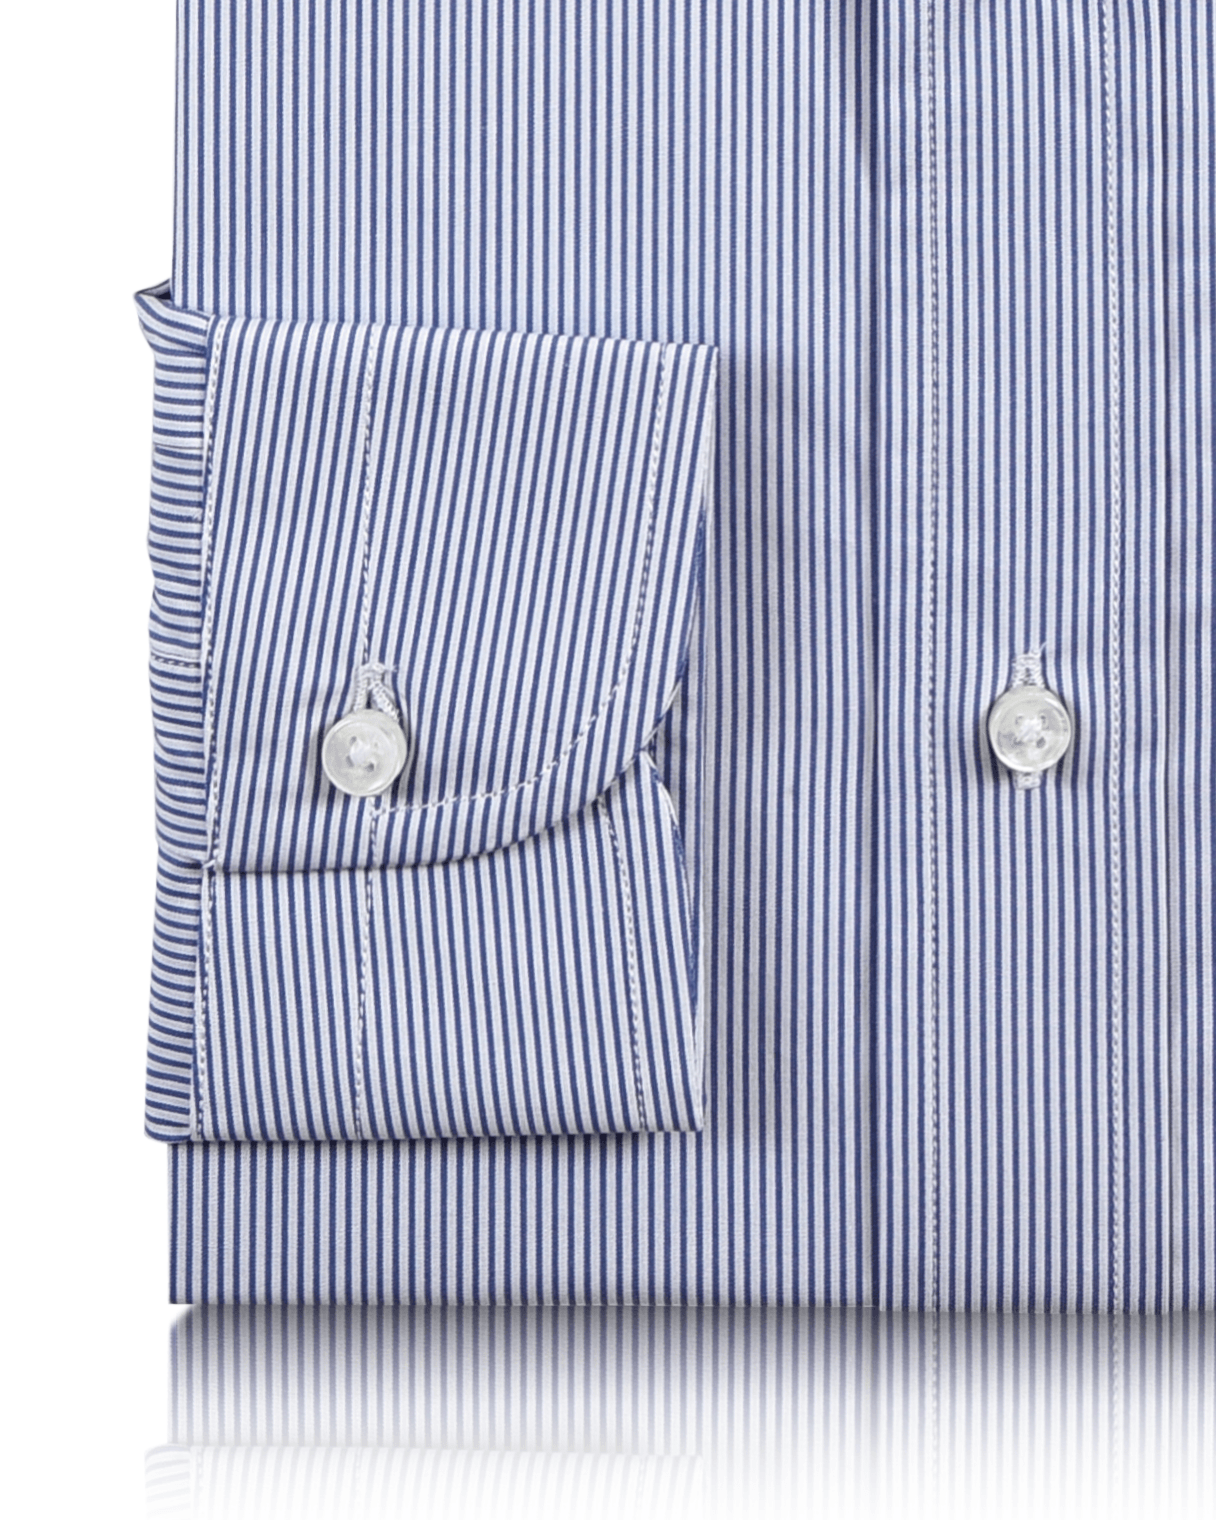 Brembana Space Blue White Pin Stripes Shirt